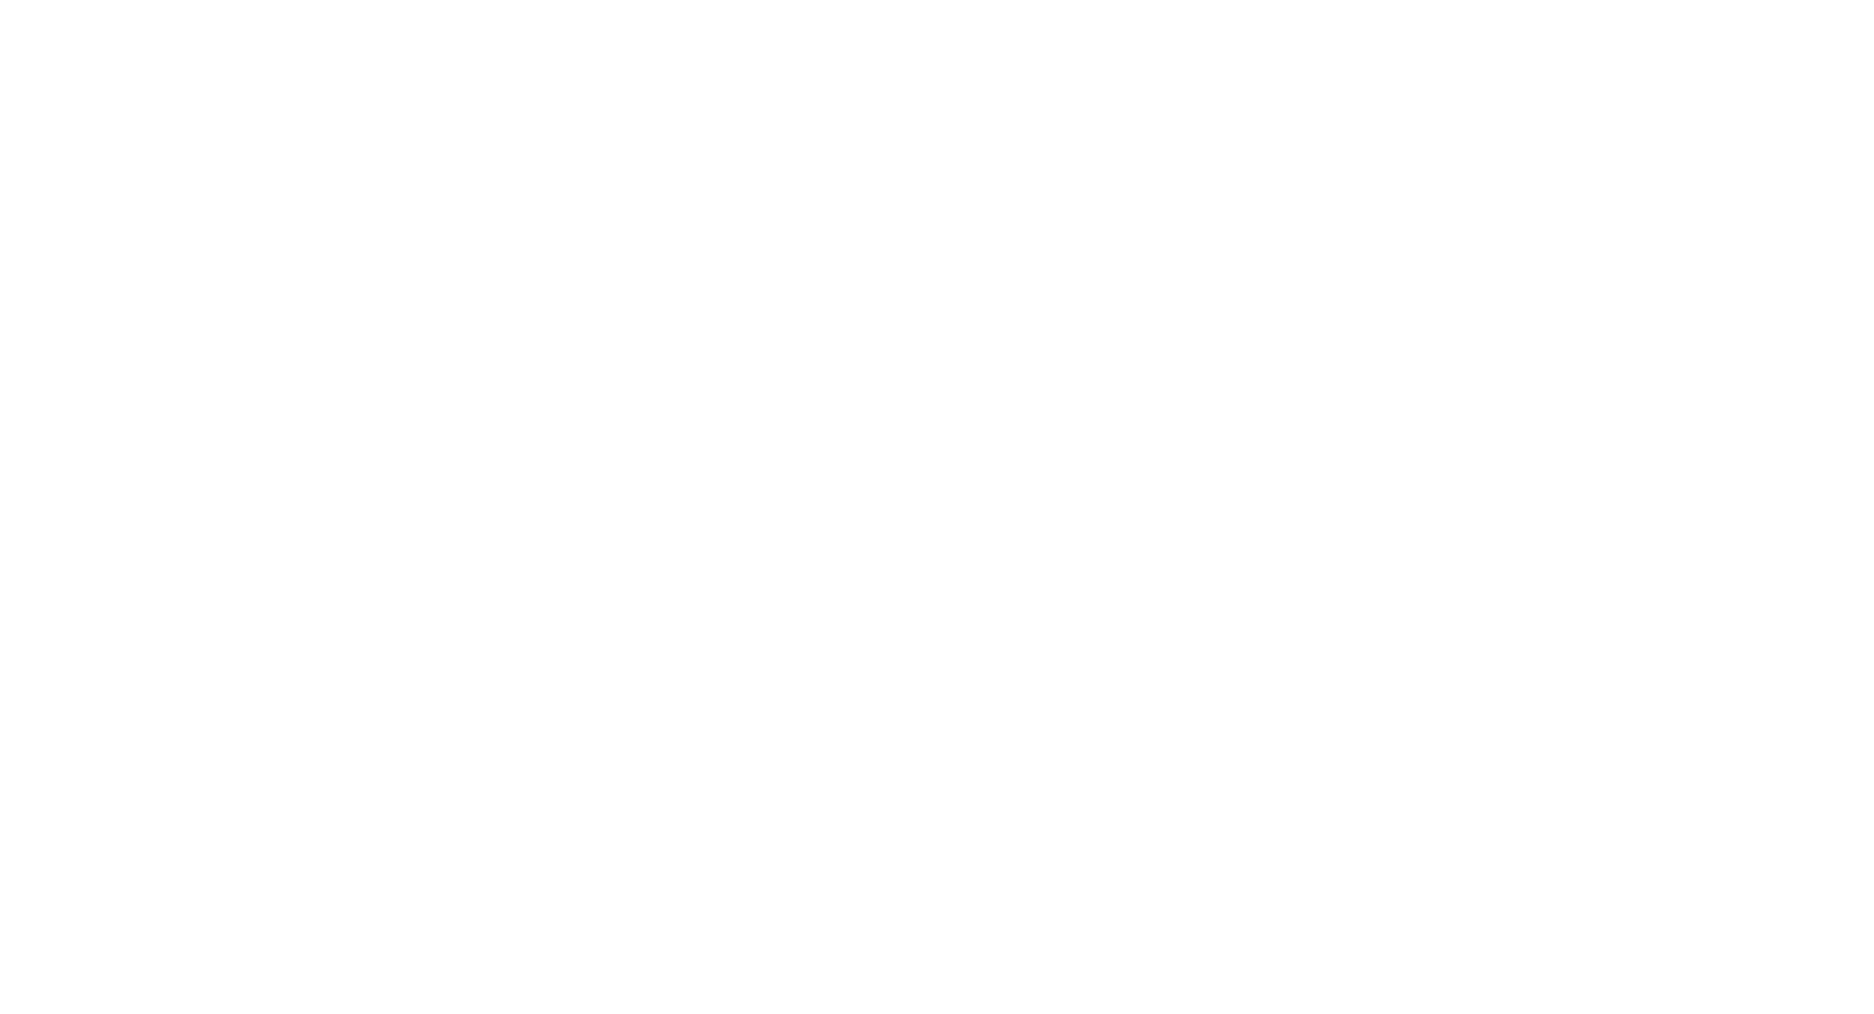 Imagine Alley